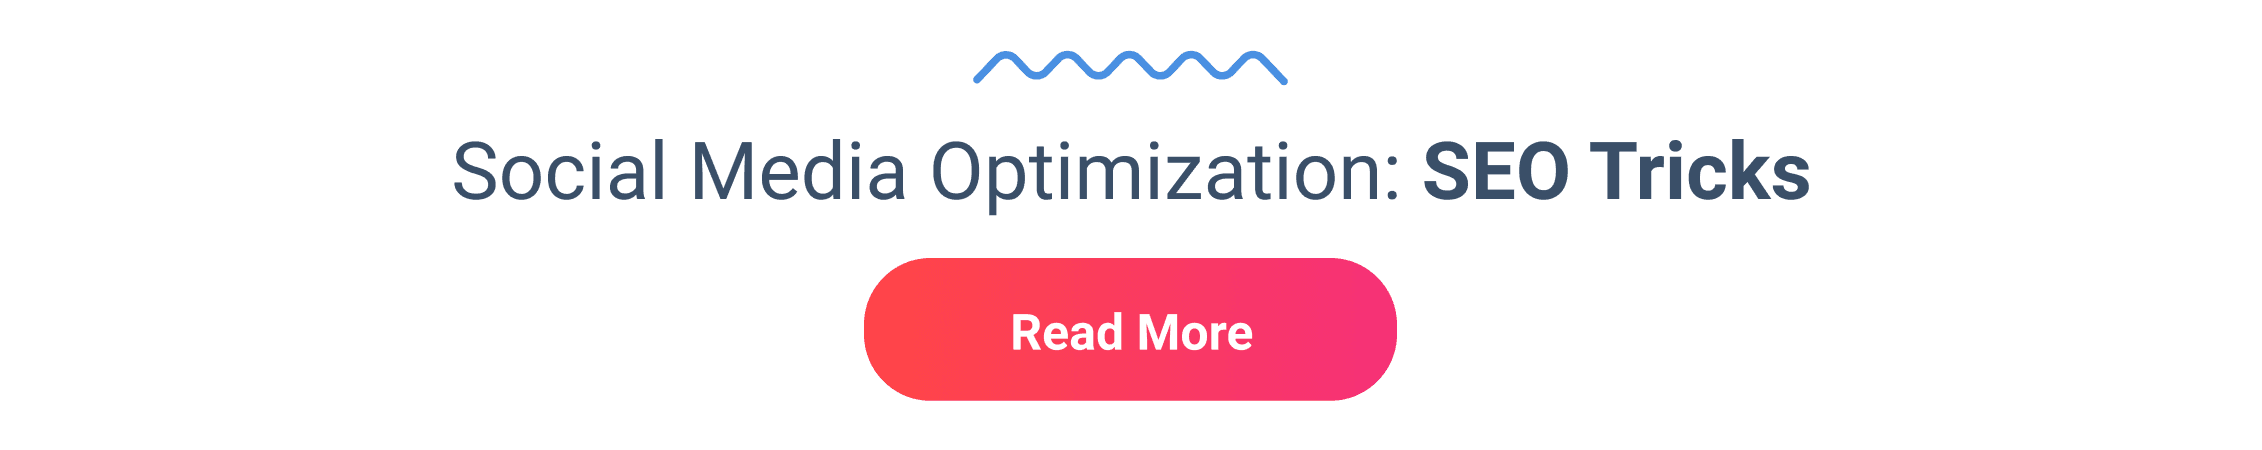 Social media optimization: SEO tricks banner